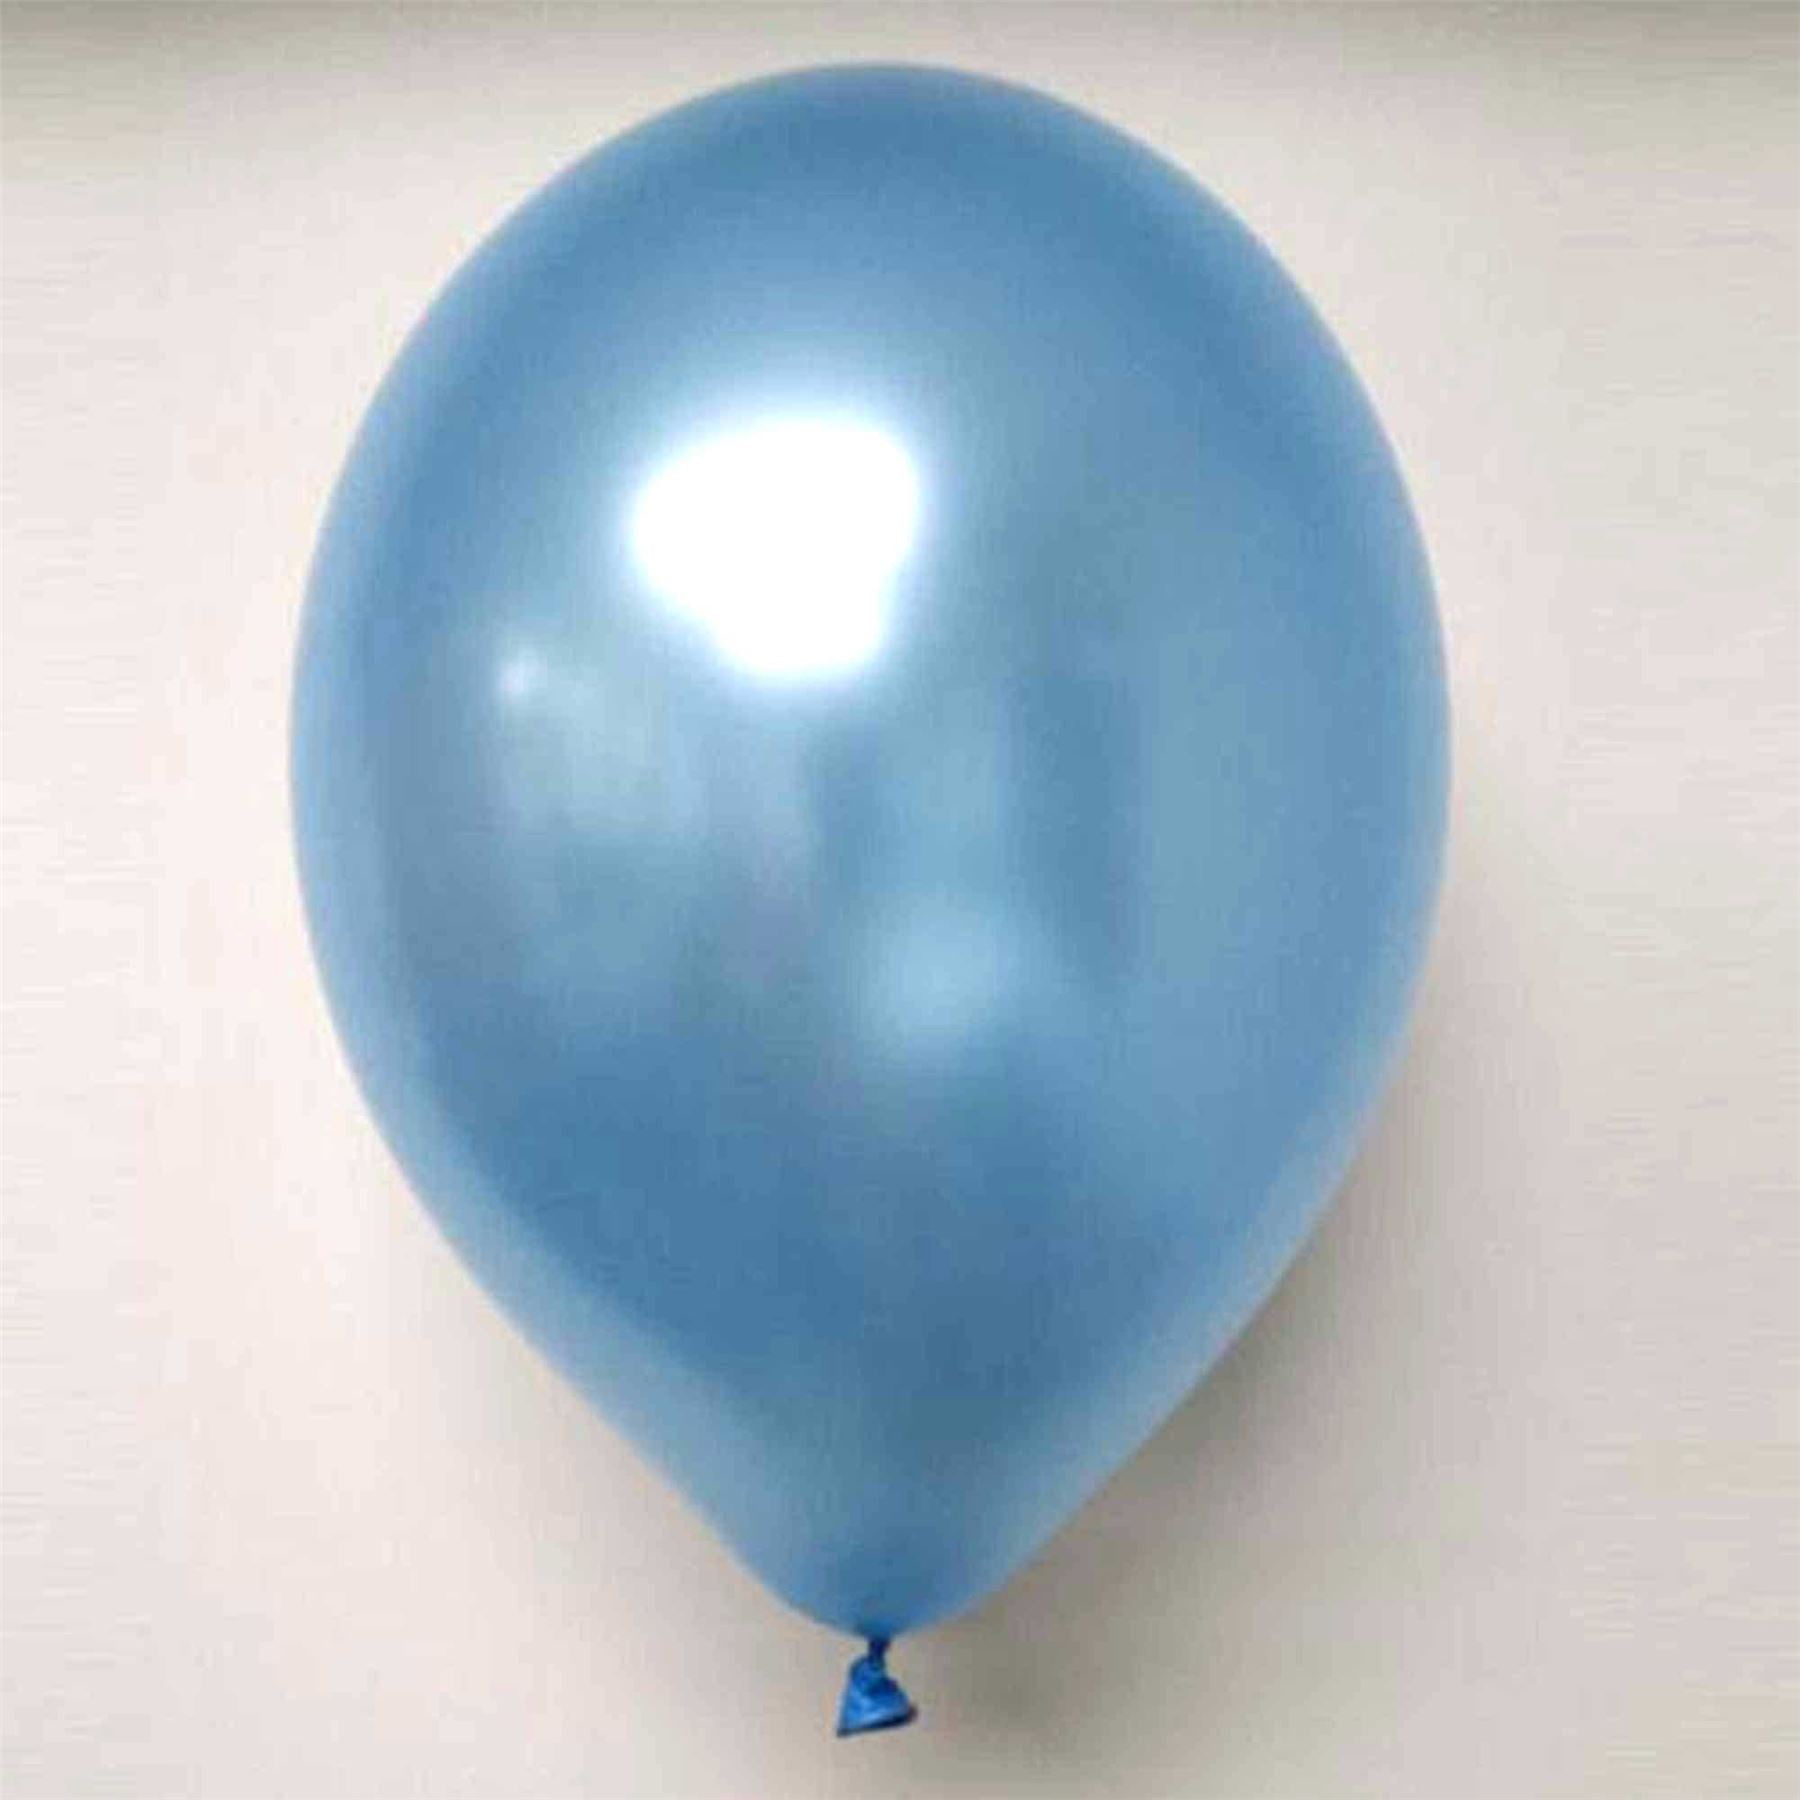 5 x 12" Metallic Blue PLAIN Latex Balloons Birthday Party Wedding Celebrations